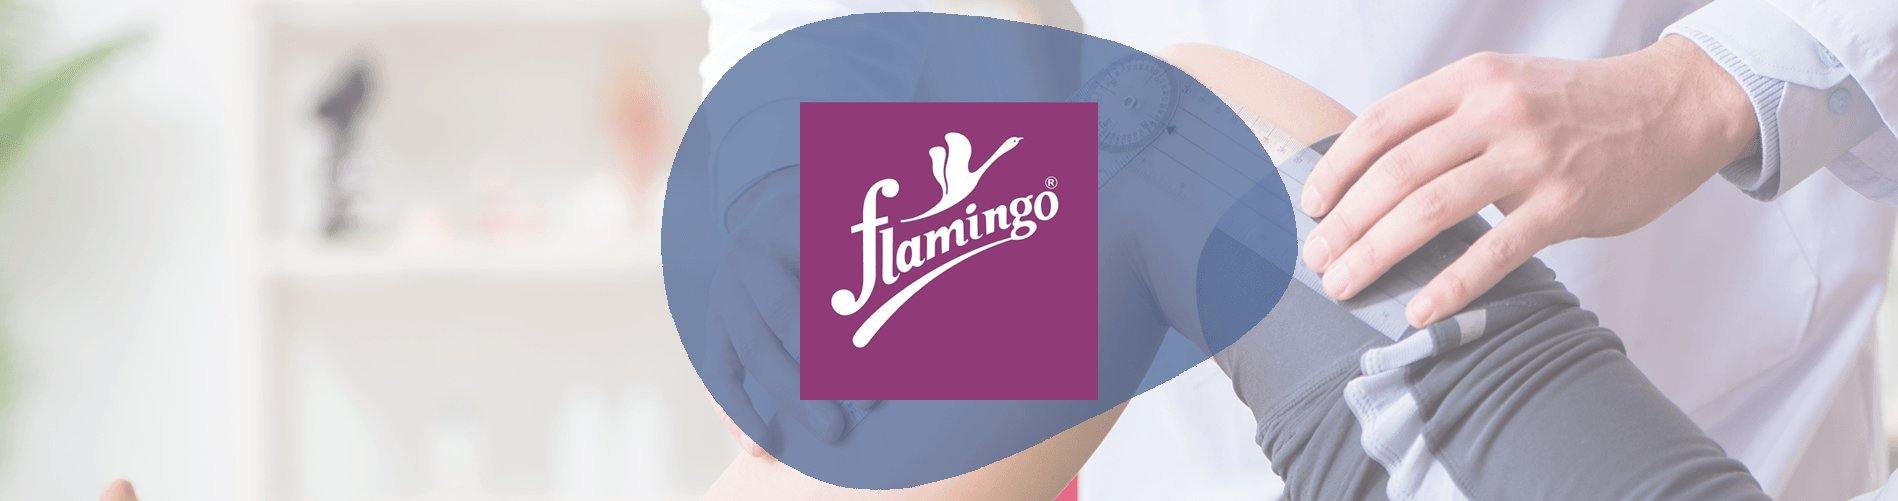 Flamigo Skin Color Sauna Belt Flamingo for Household at Rs 1695 in